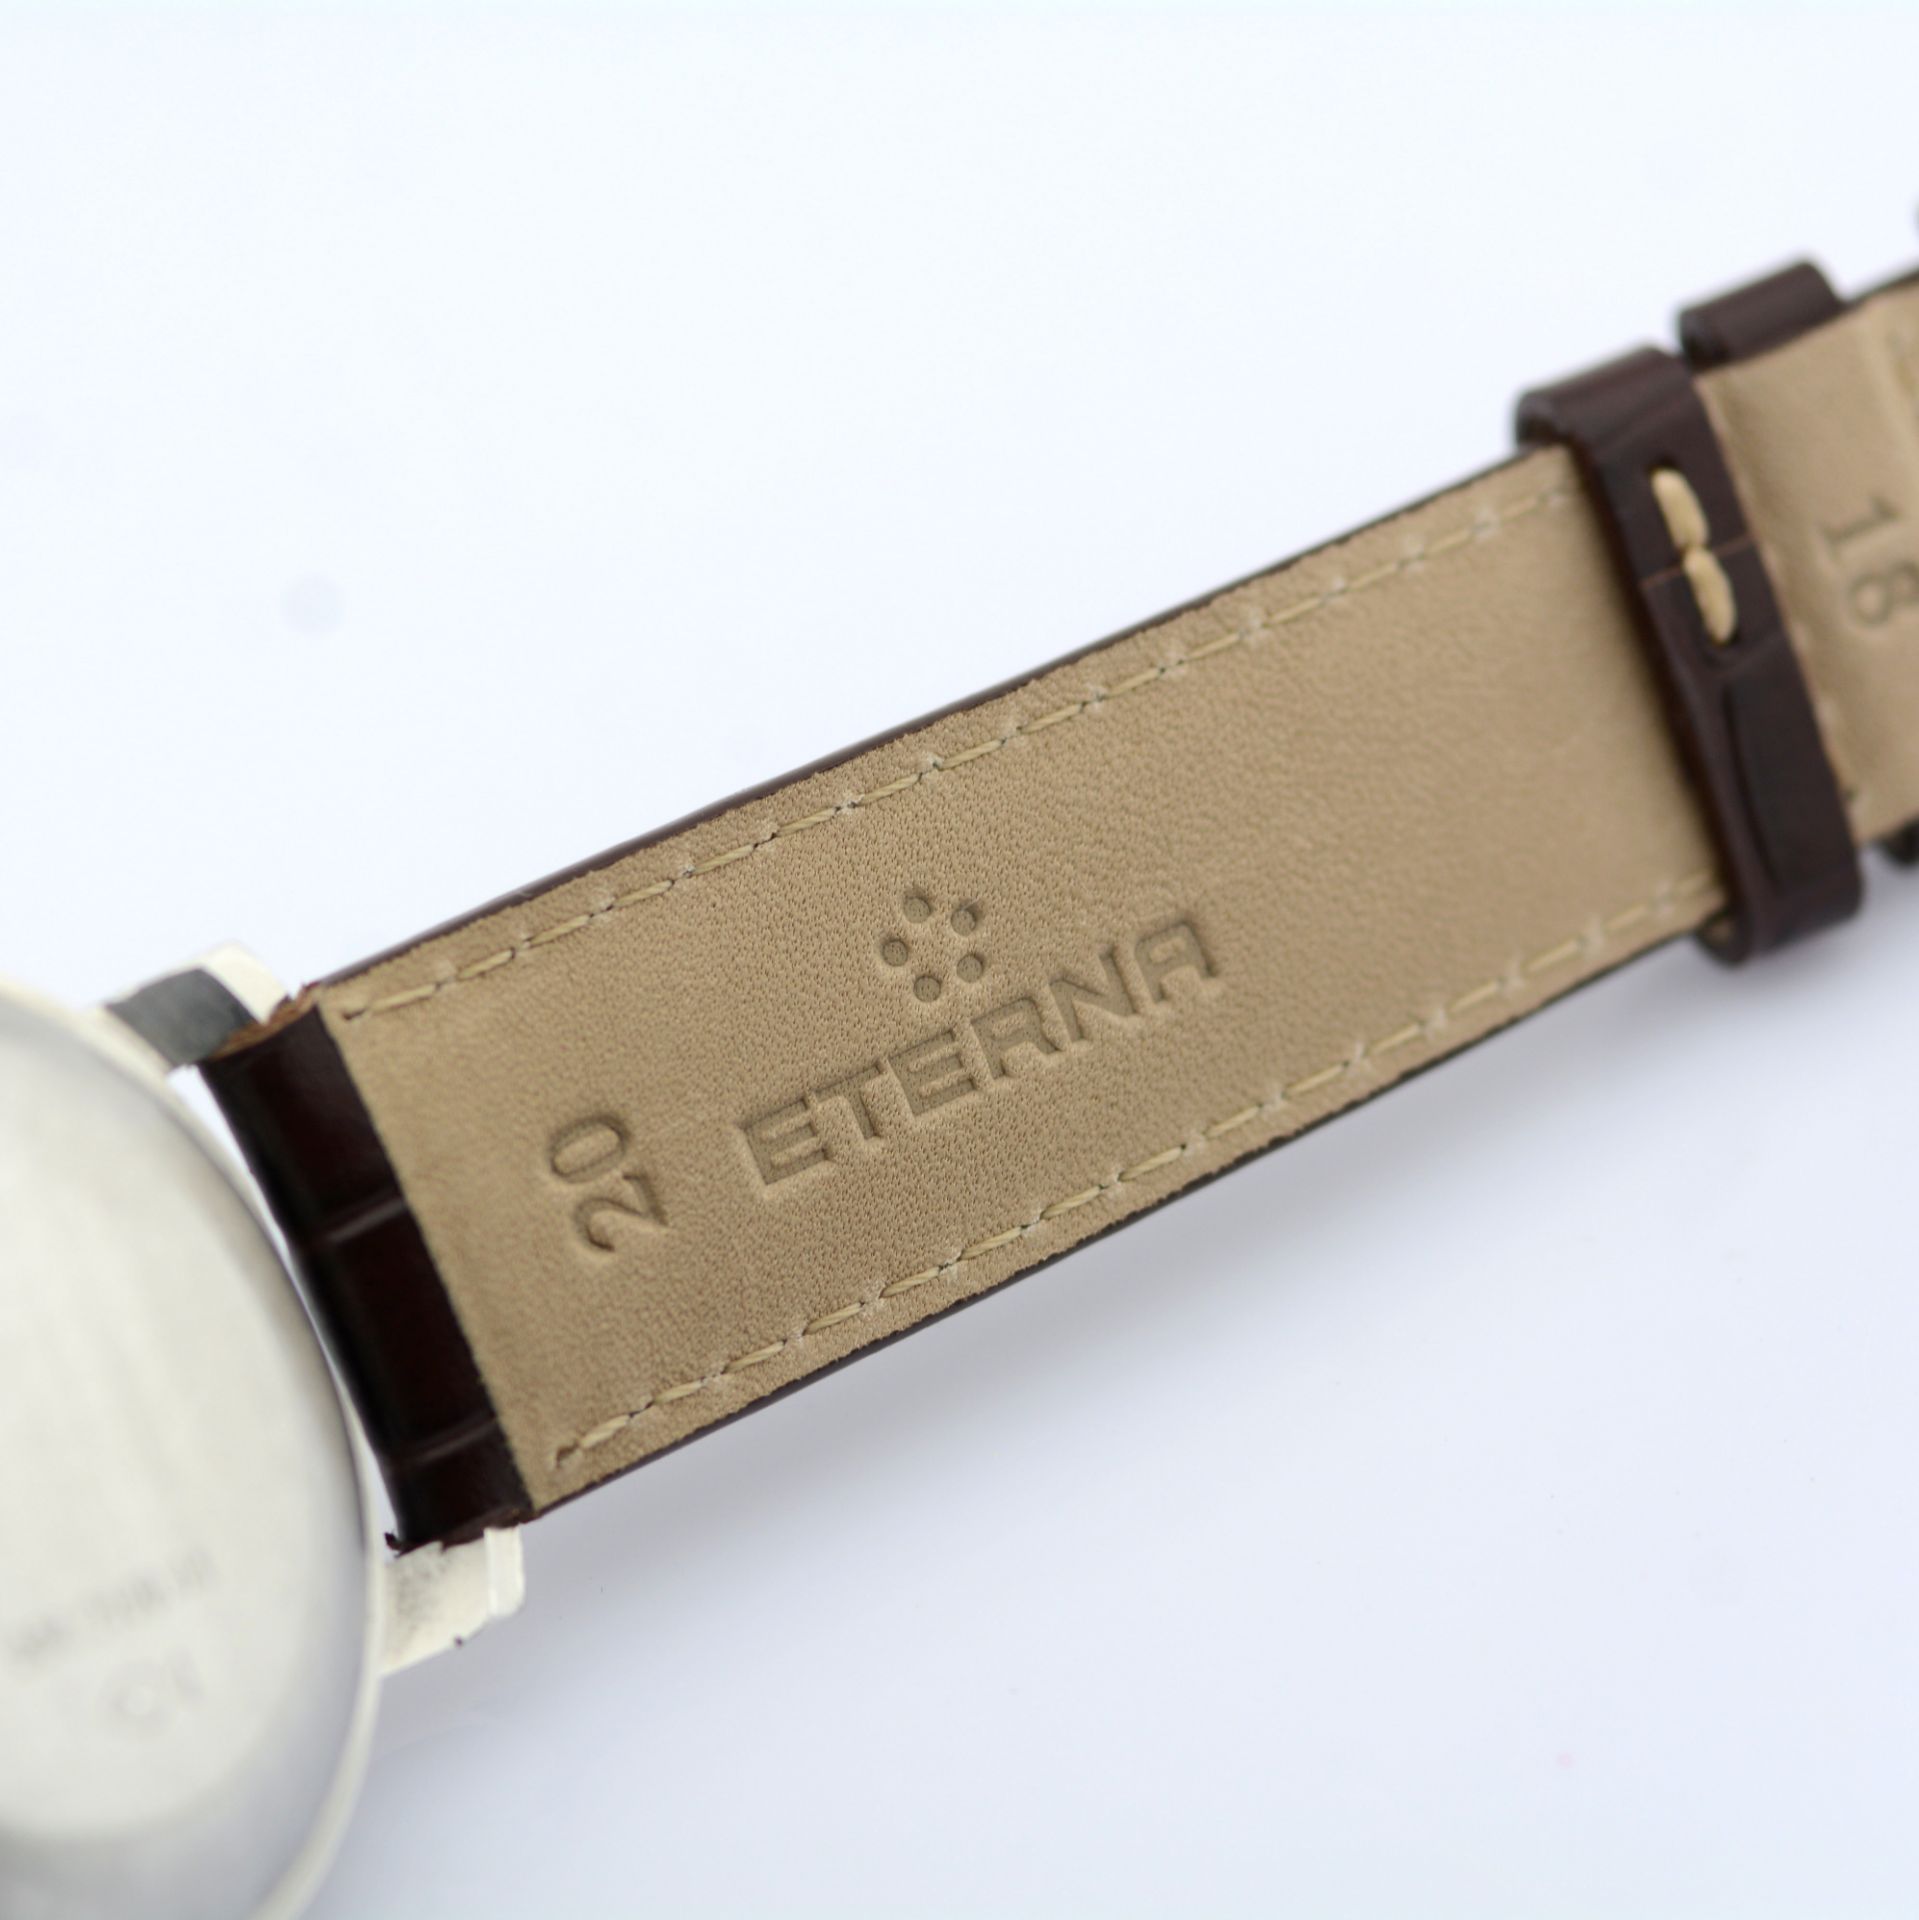 Eterna-Matic / Vintage Chronograph Automatic Day - Date - Gentlmen's Steel Wrist Watch - Image 10 of 10